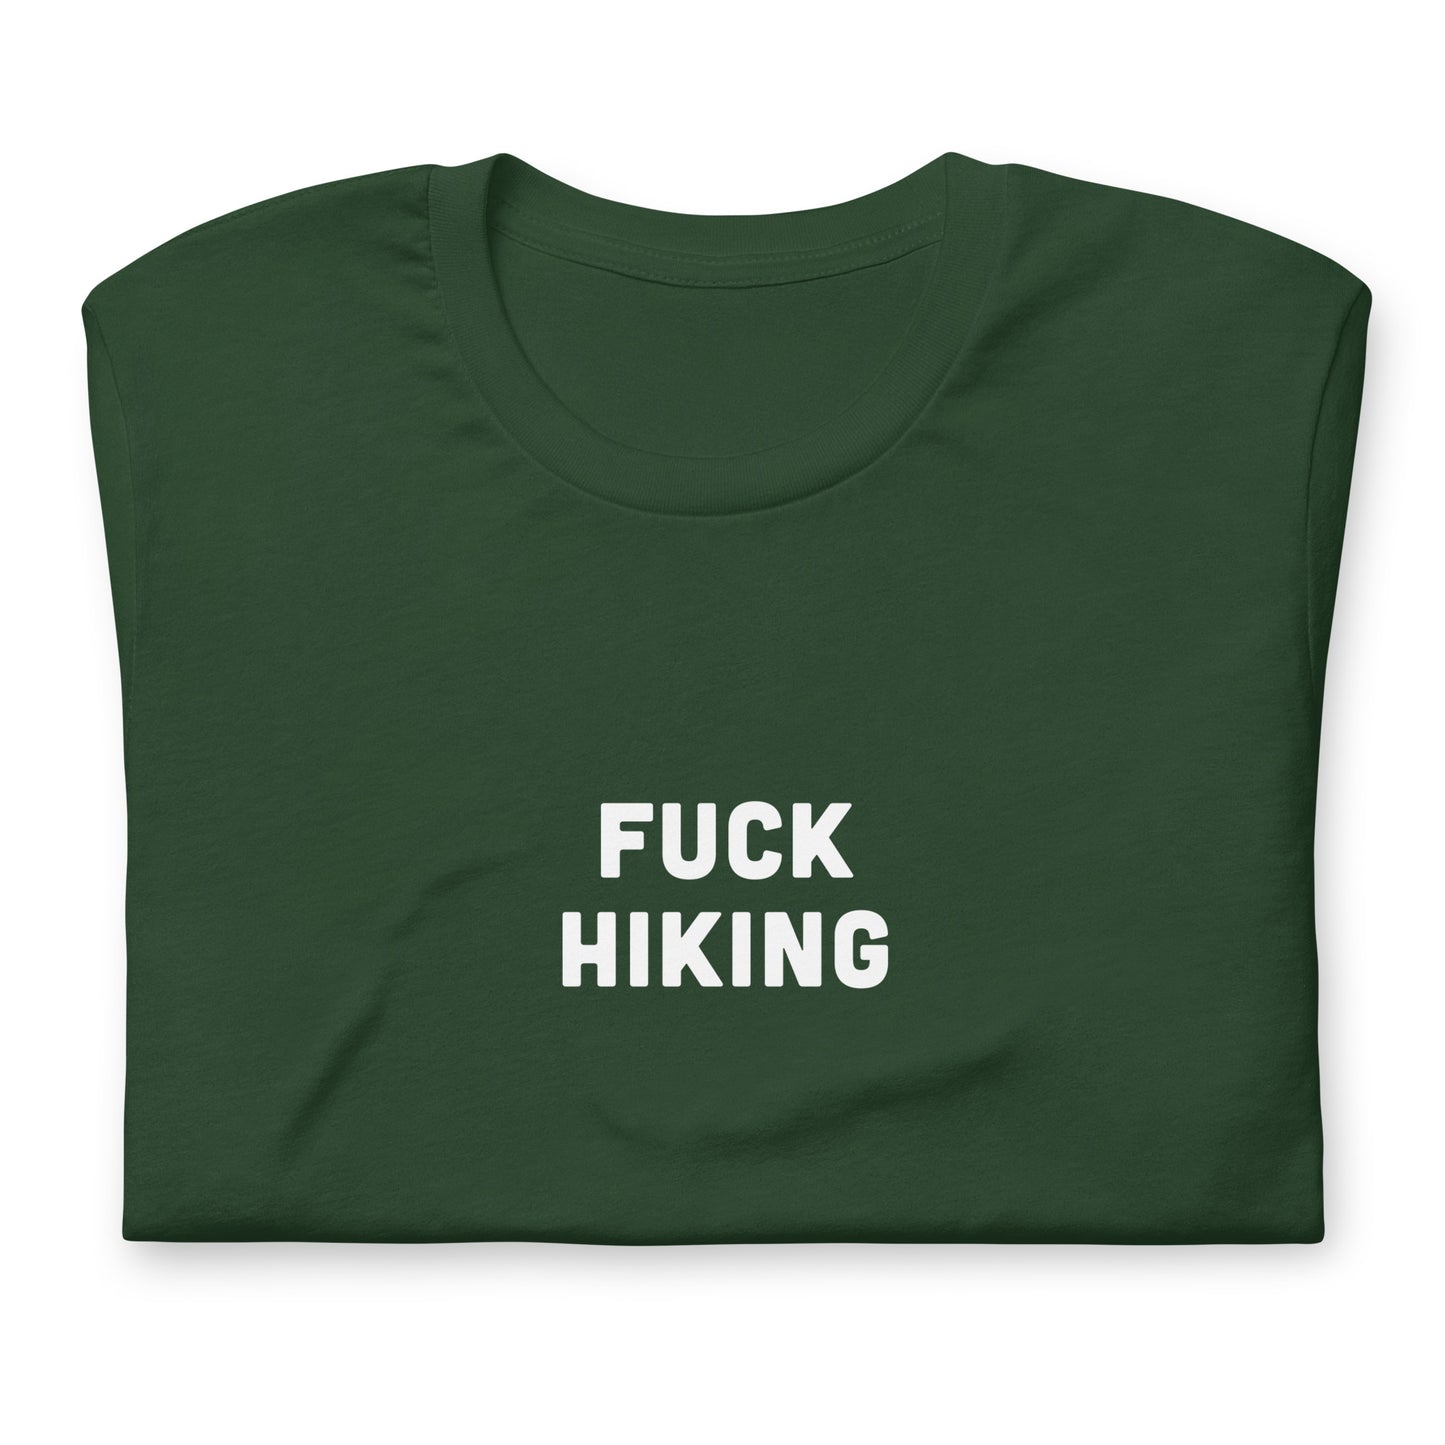 Fuck Hiking T-Shirt Size XL Color Black